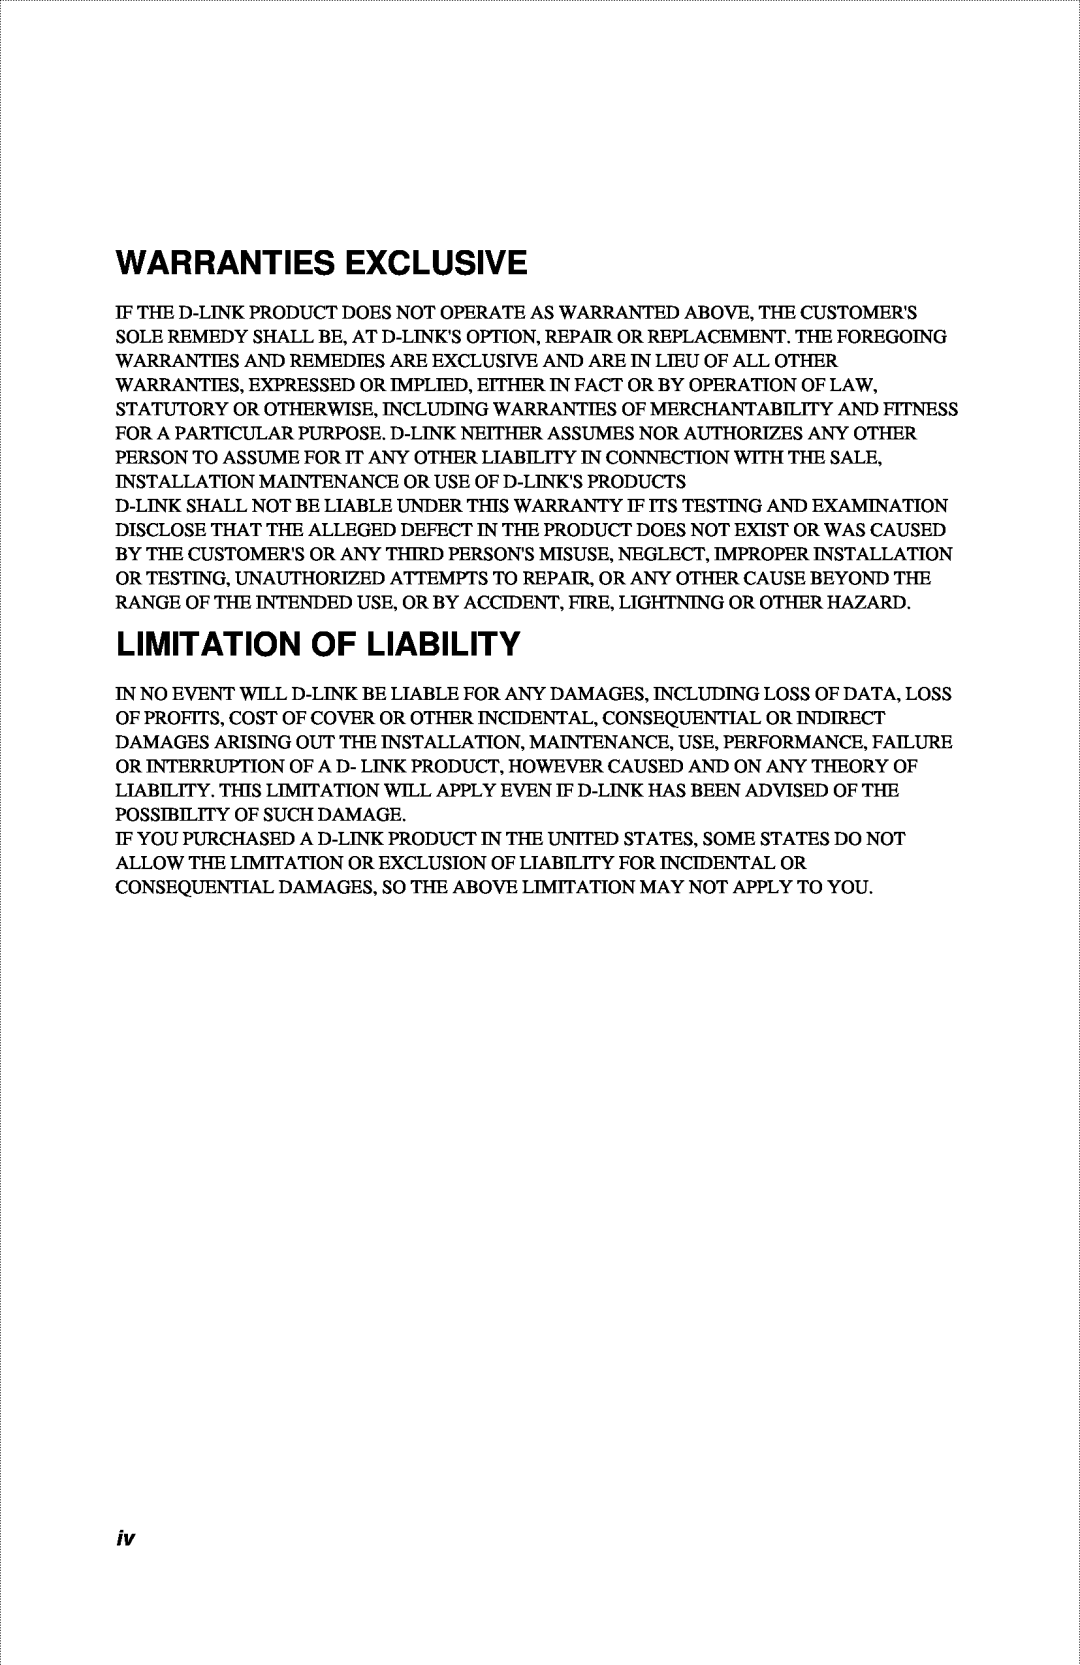 D-Link DFE-916X manual Warranties Exclusive, Limitation Of Liability 